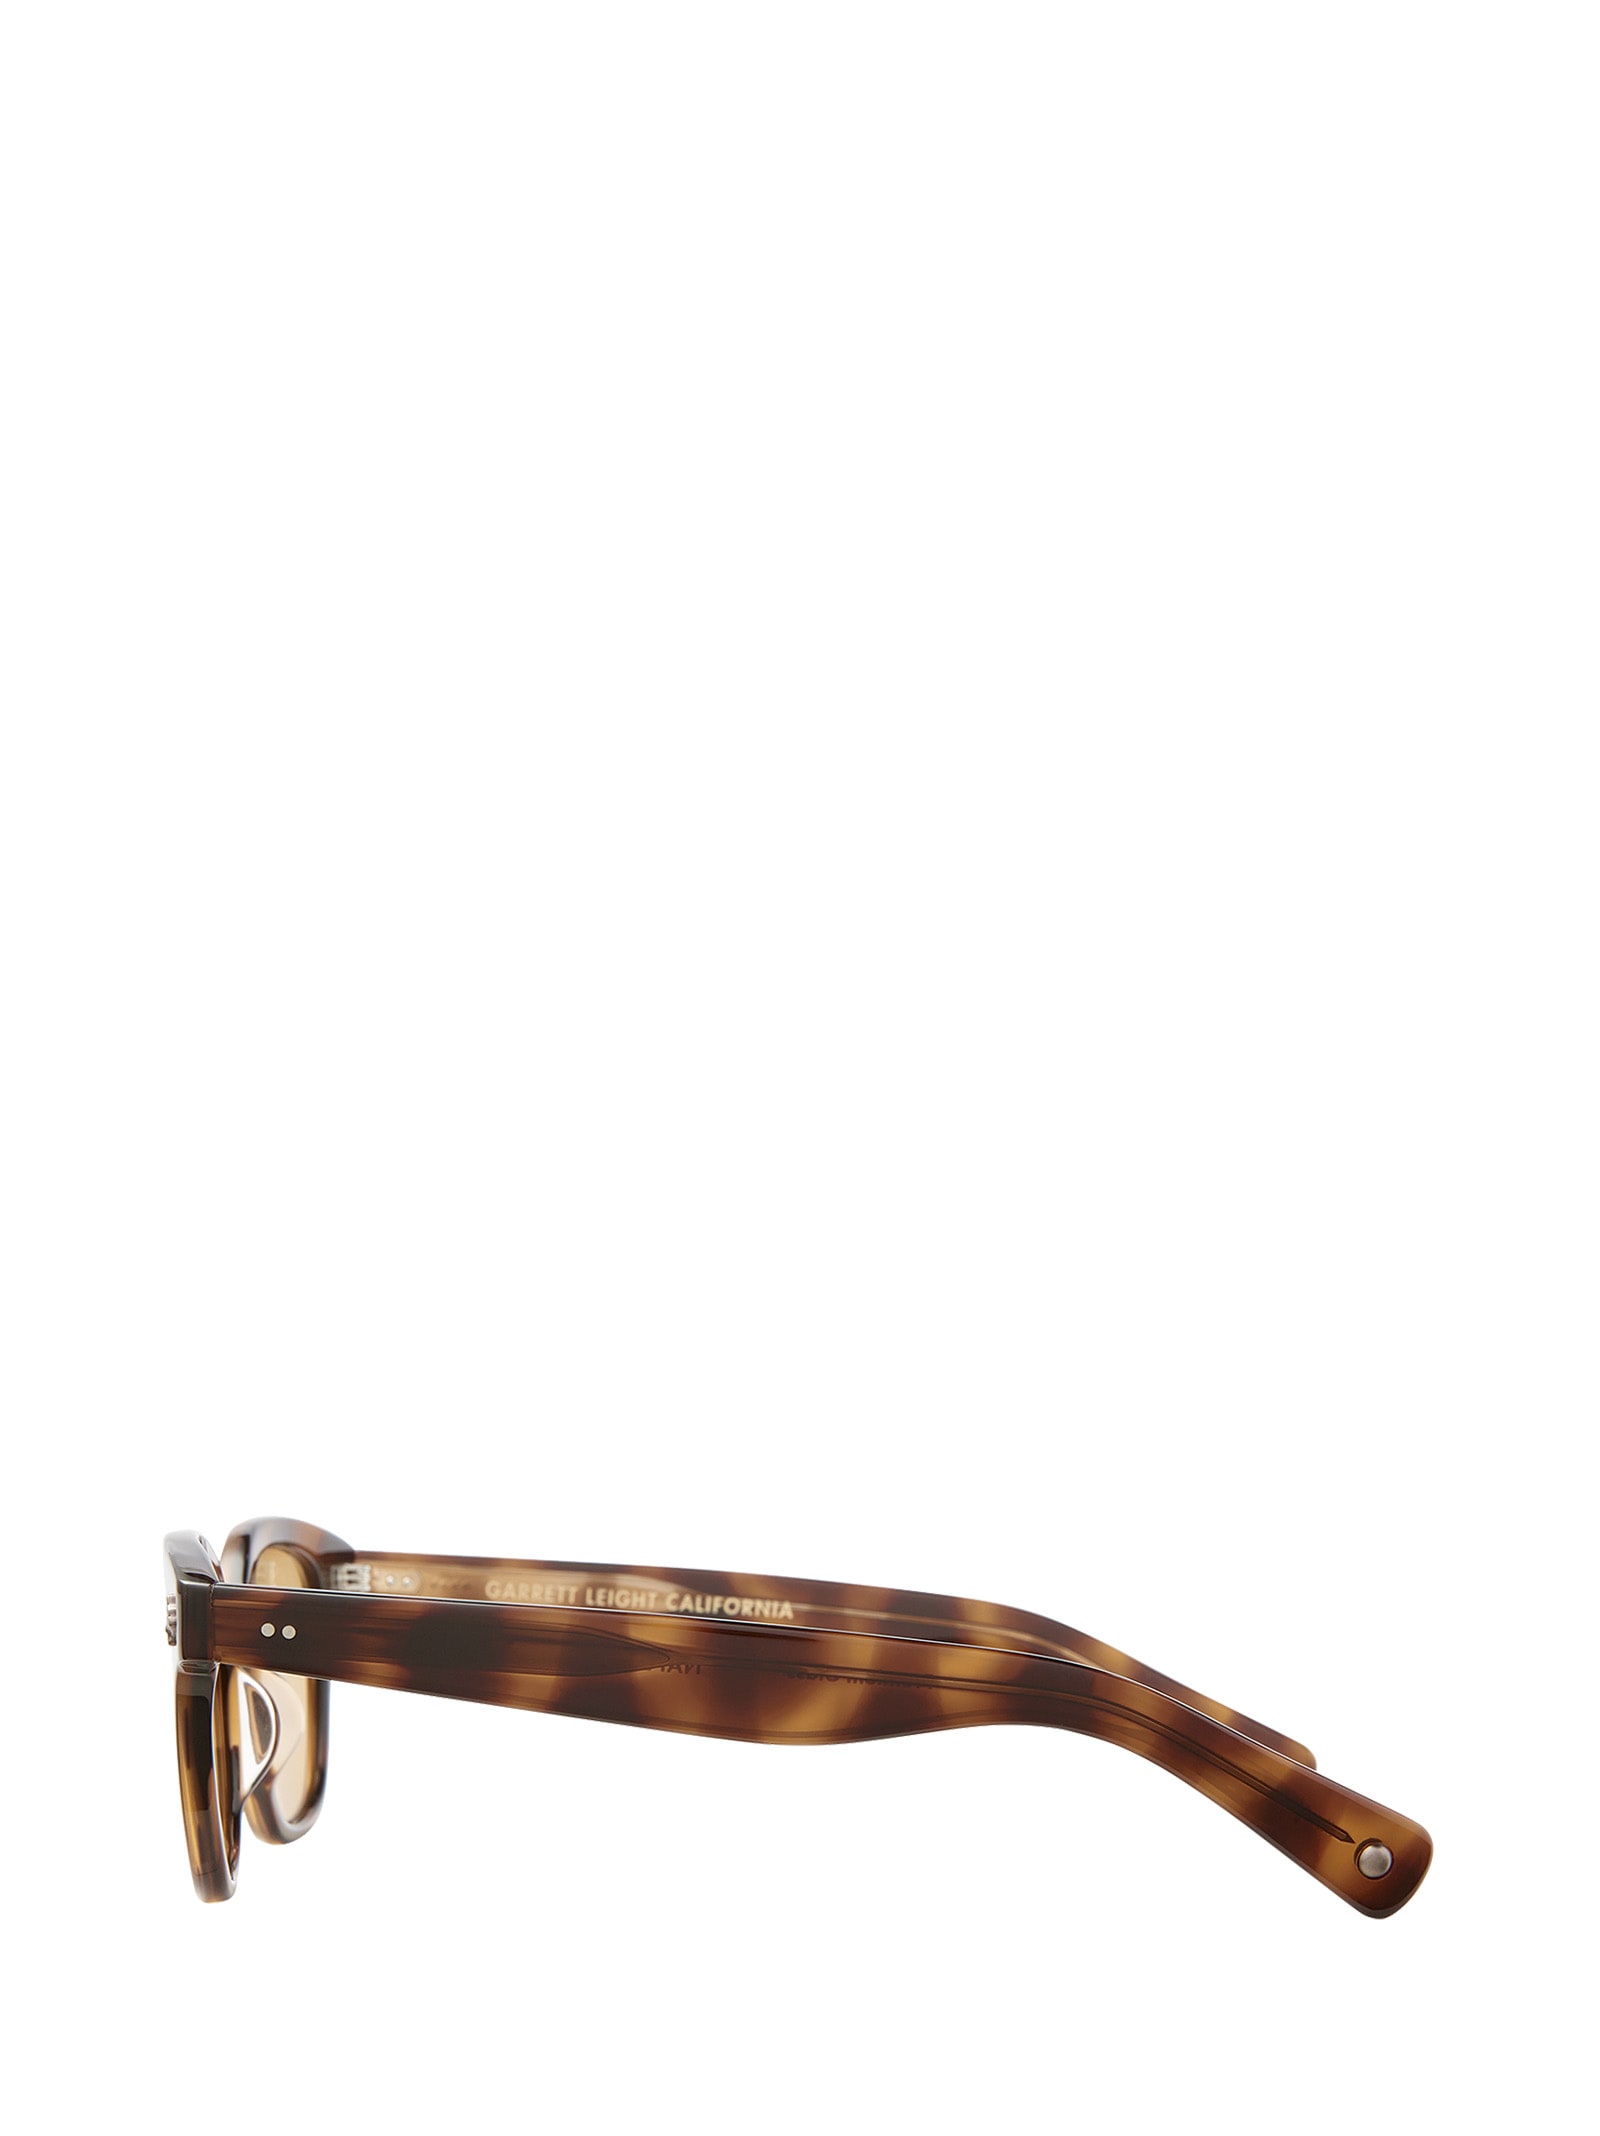 Shop Garrett Leight Naples Sun Spotted Brown Shell Sunglasses